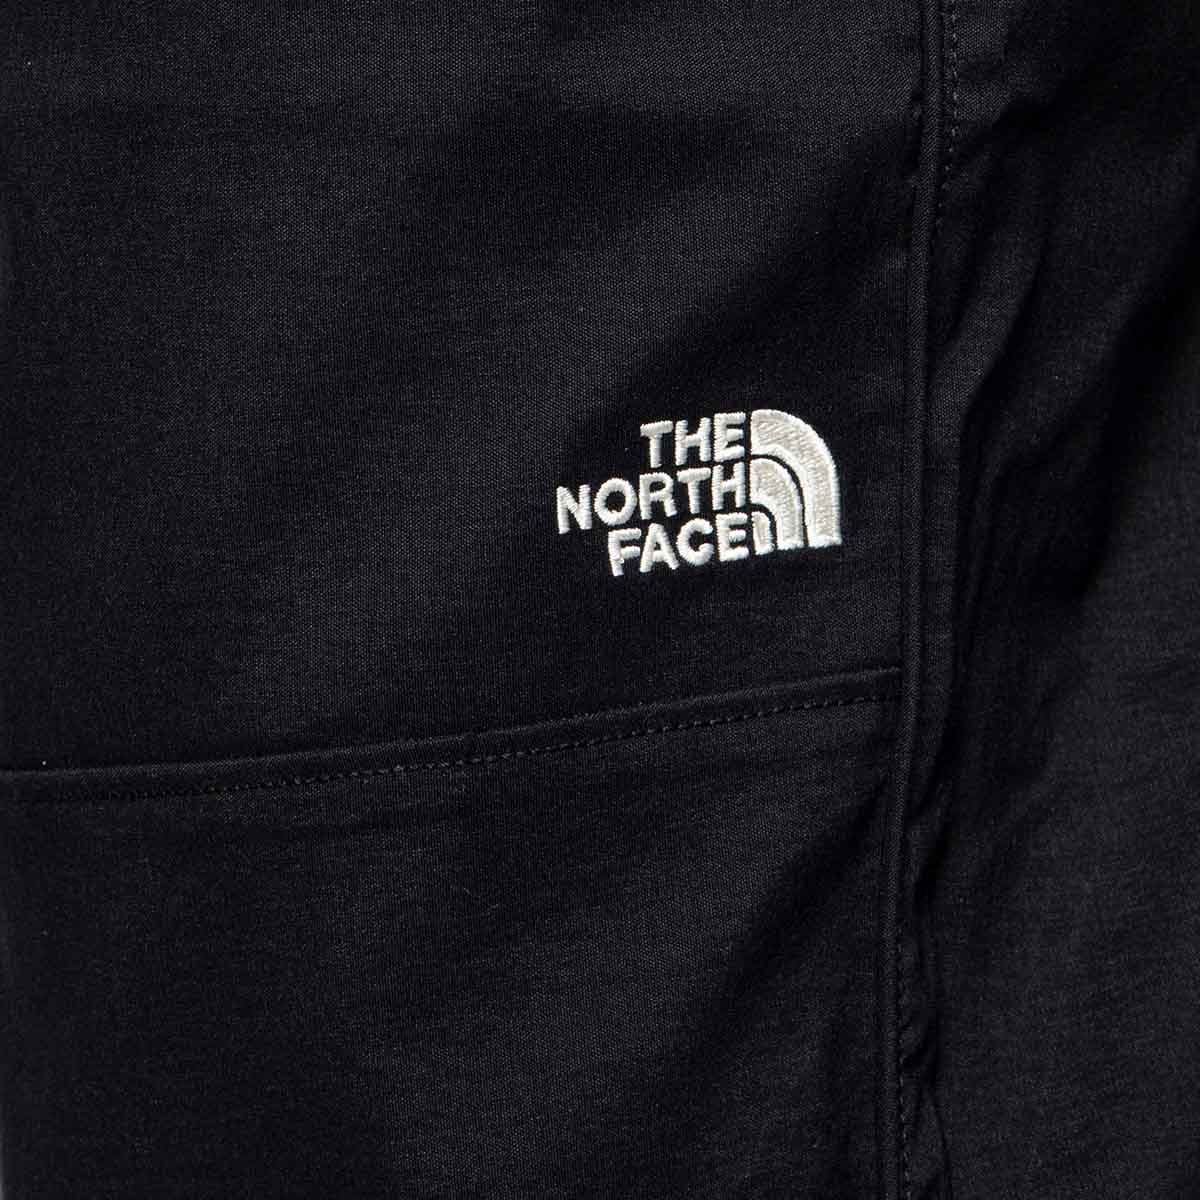 The North Face M Class V Pant black | Bludshop.com